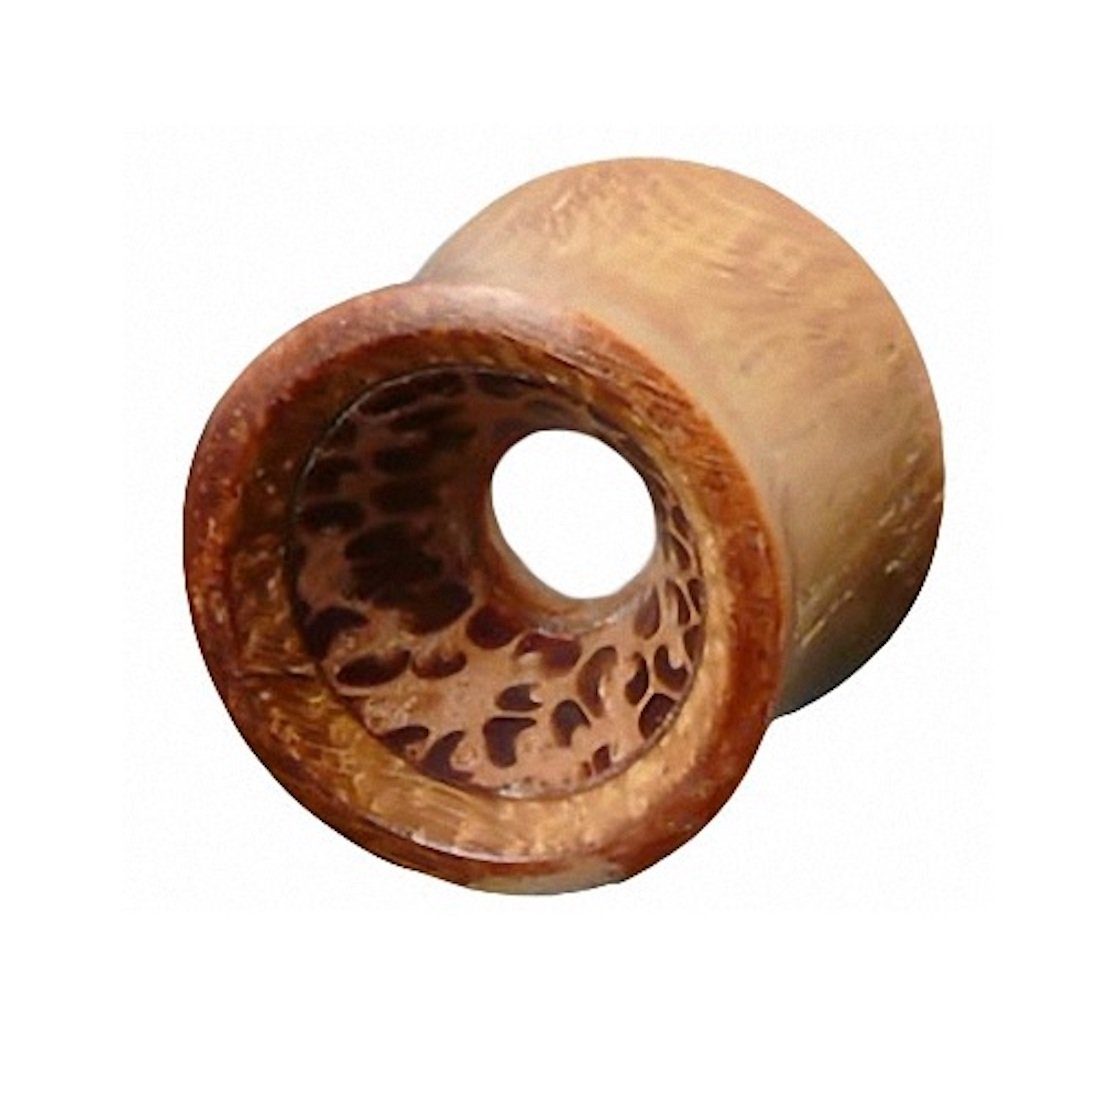 Taffstyle Plug Flesh Tunnel Ohr Plug Ear Piercing Organic mit Hol, Flesh Tunnel Ohr Plug Ear Piercing Organic Holz Double Flared Braun | Plugs